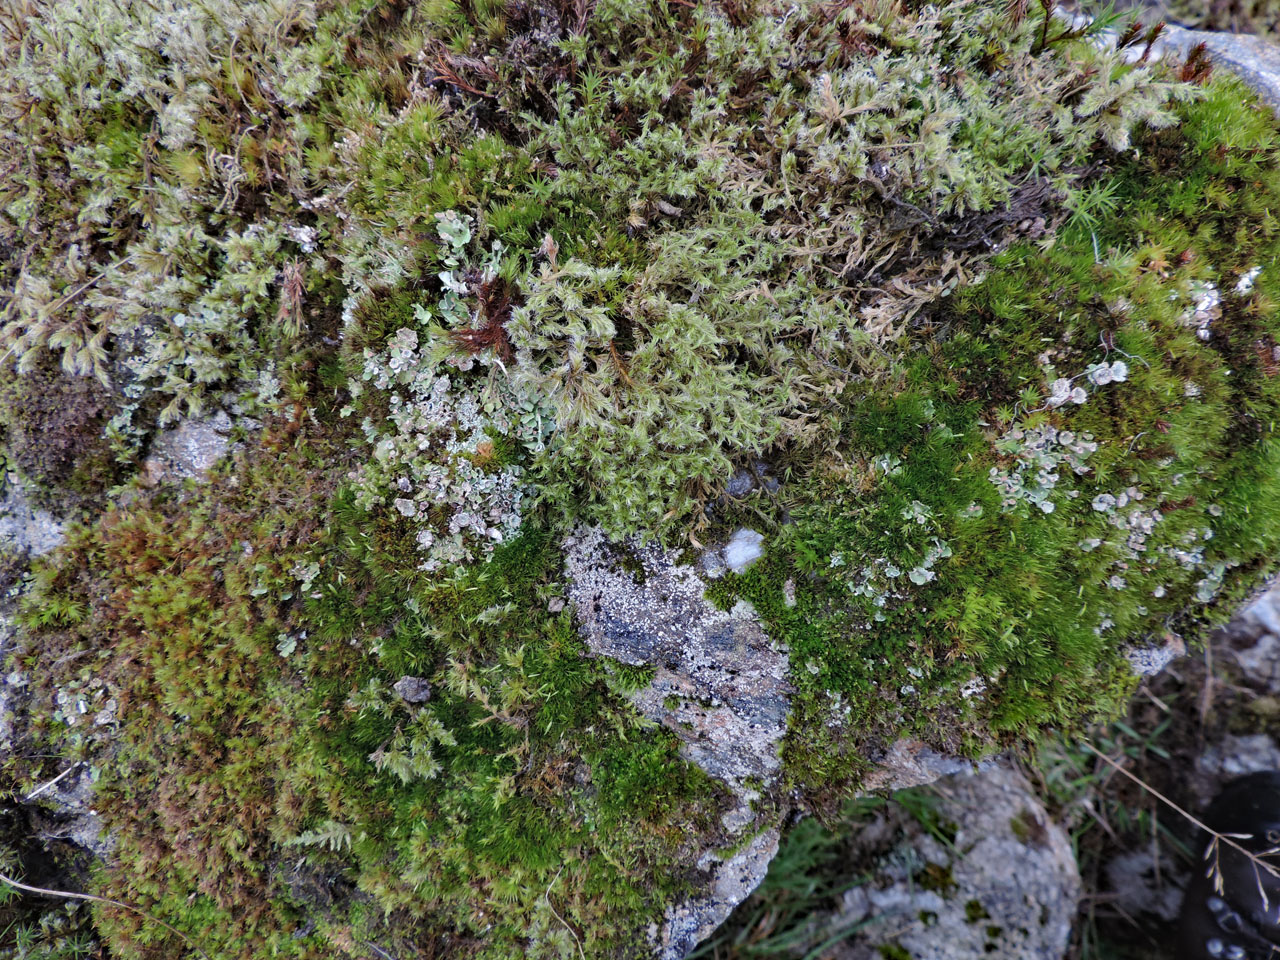 Cladonia cyathomorpha habitat, mossy acid rock